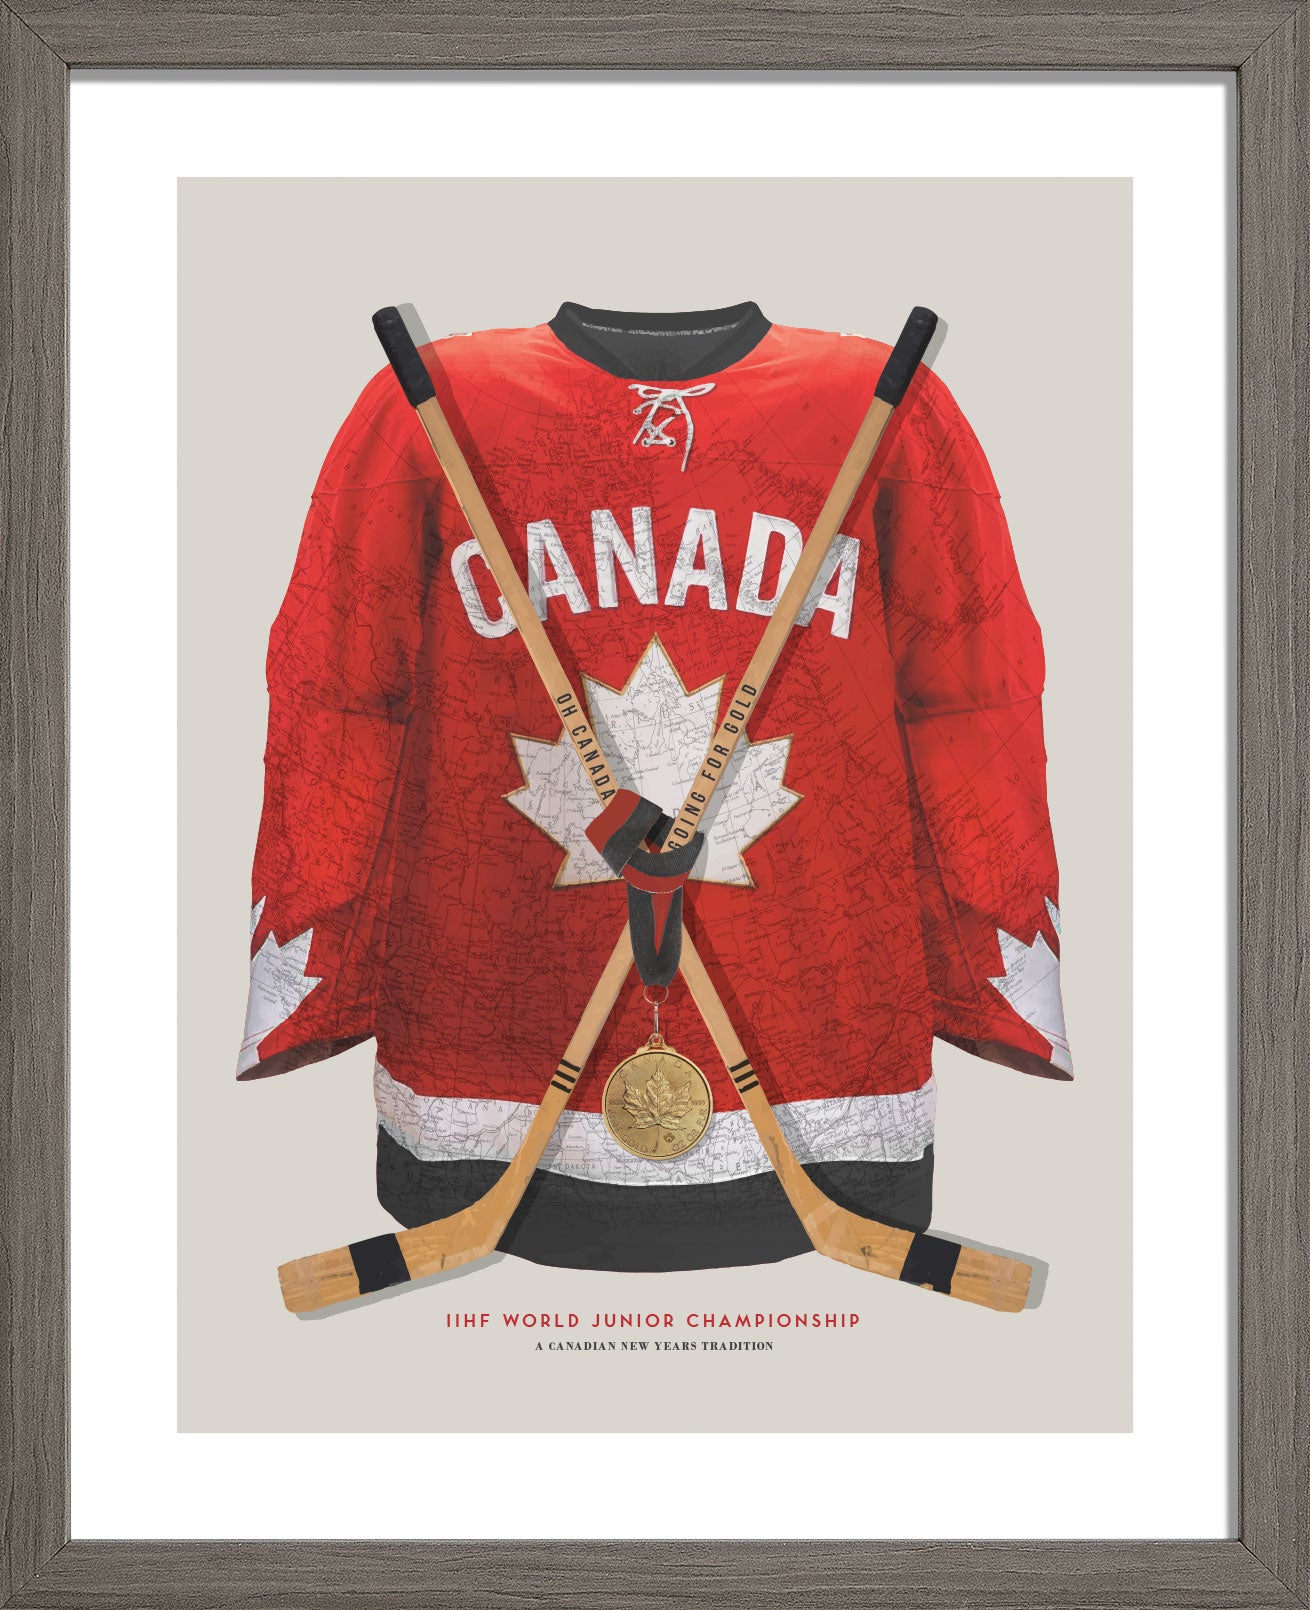 Canada Hockey Jersey (1955 World Championship) by Massimo on Dribbble